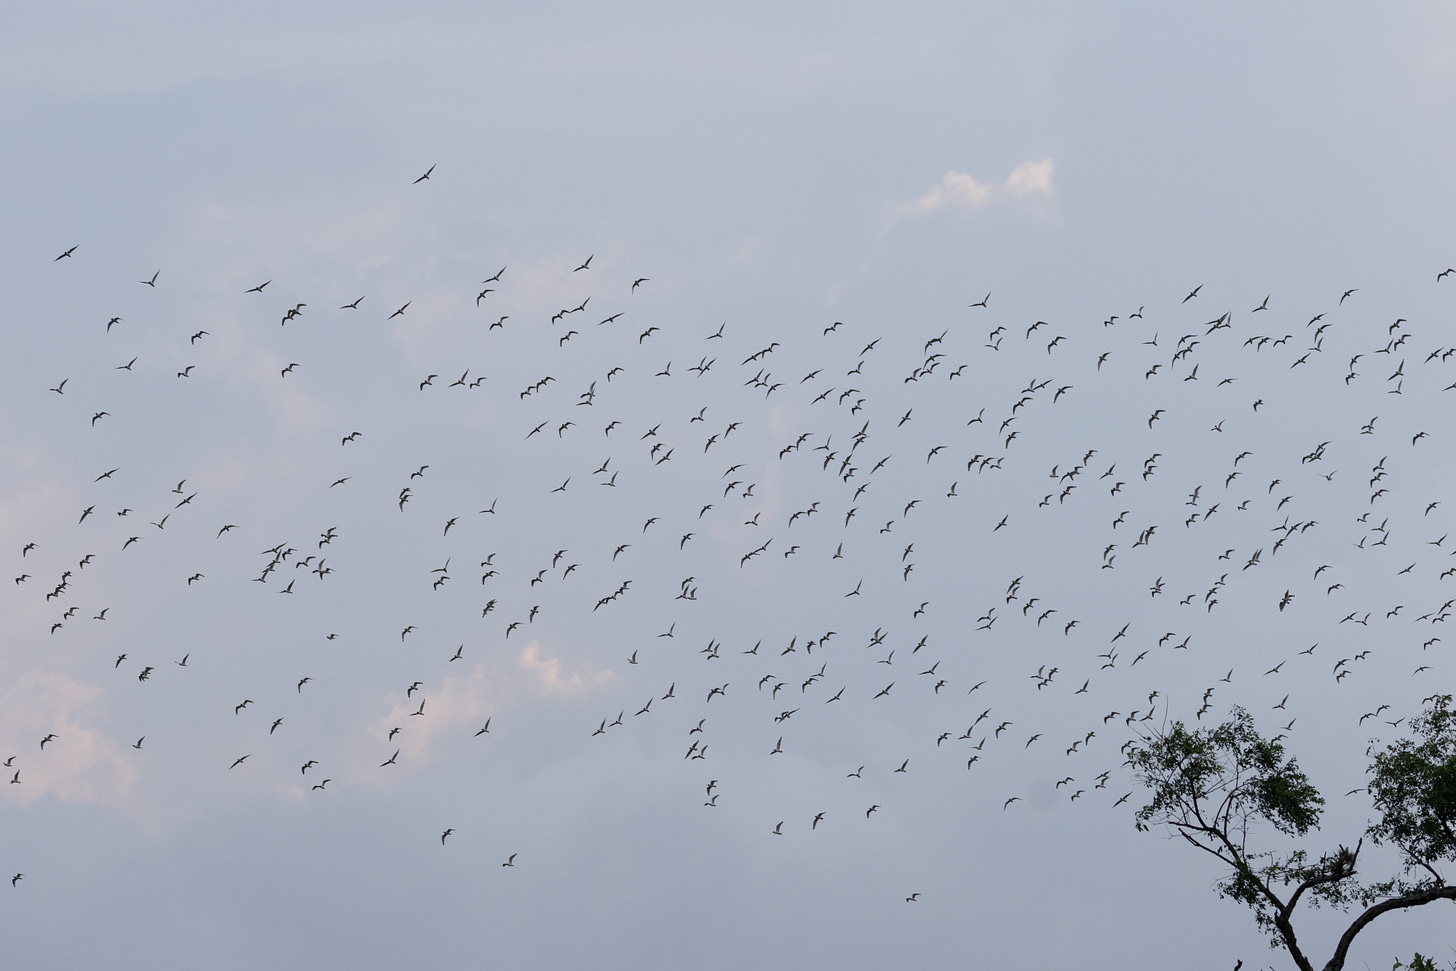 hundreds of seagulls set against a cloudy sky